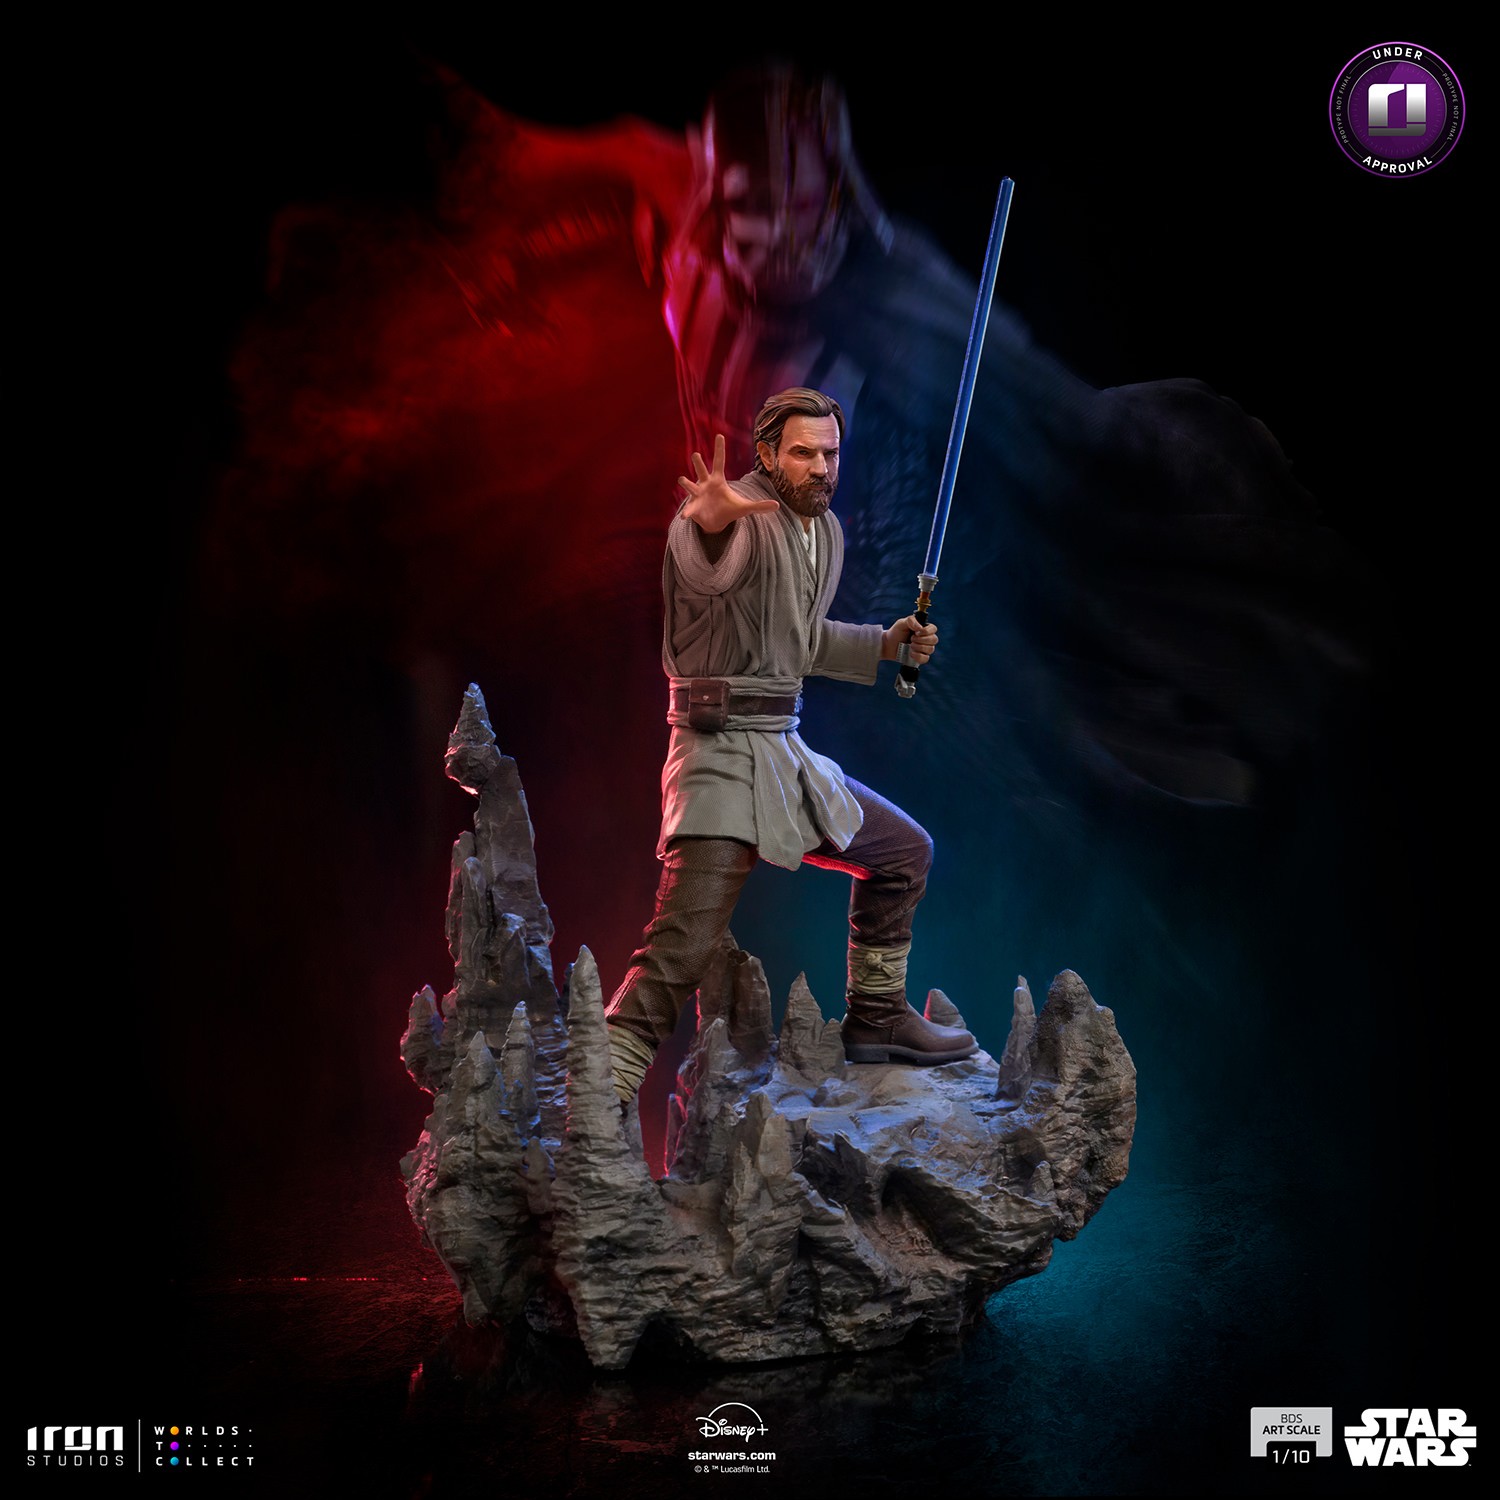 Obi-Wan Kenobi (Prototype Shown) View 4